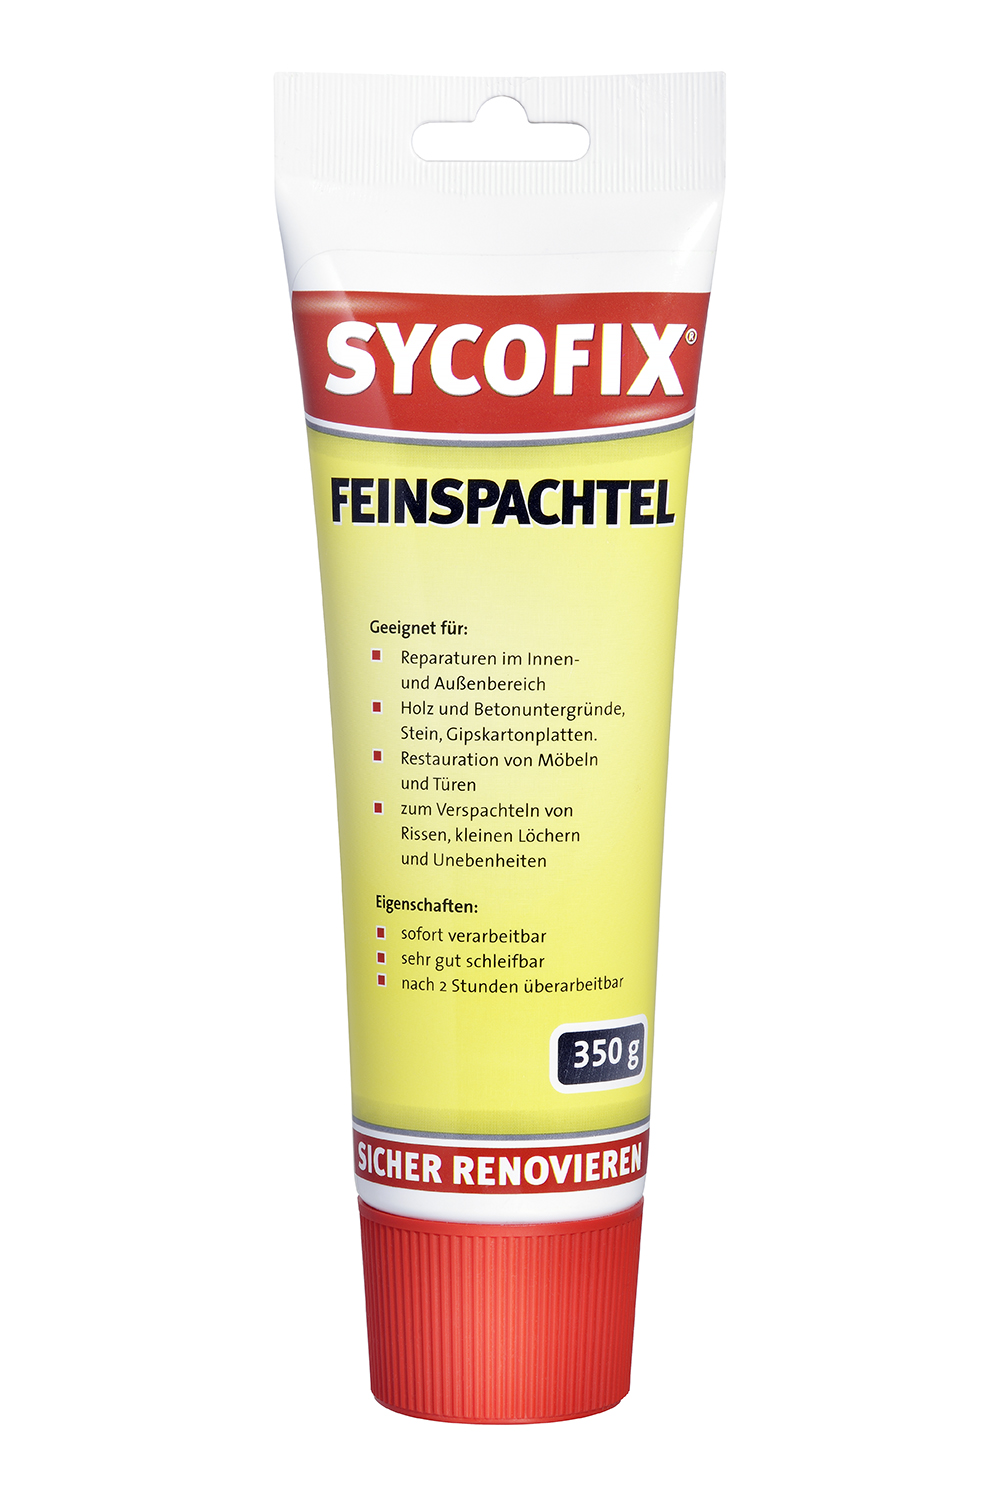 Sycofix Feinspachtel